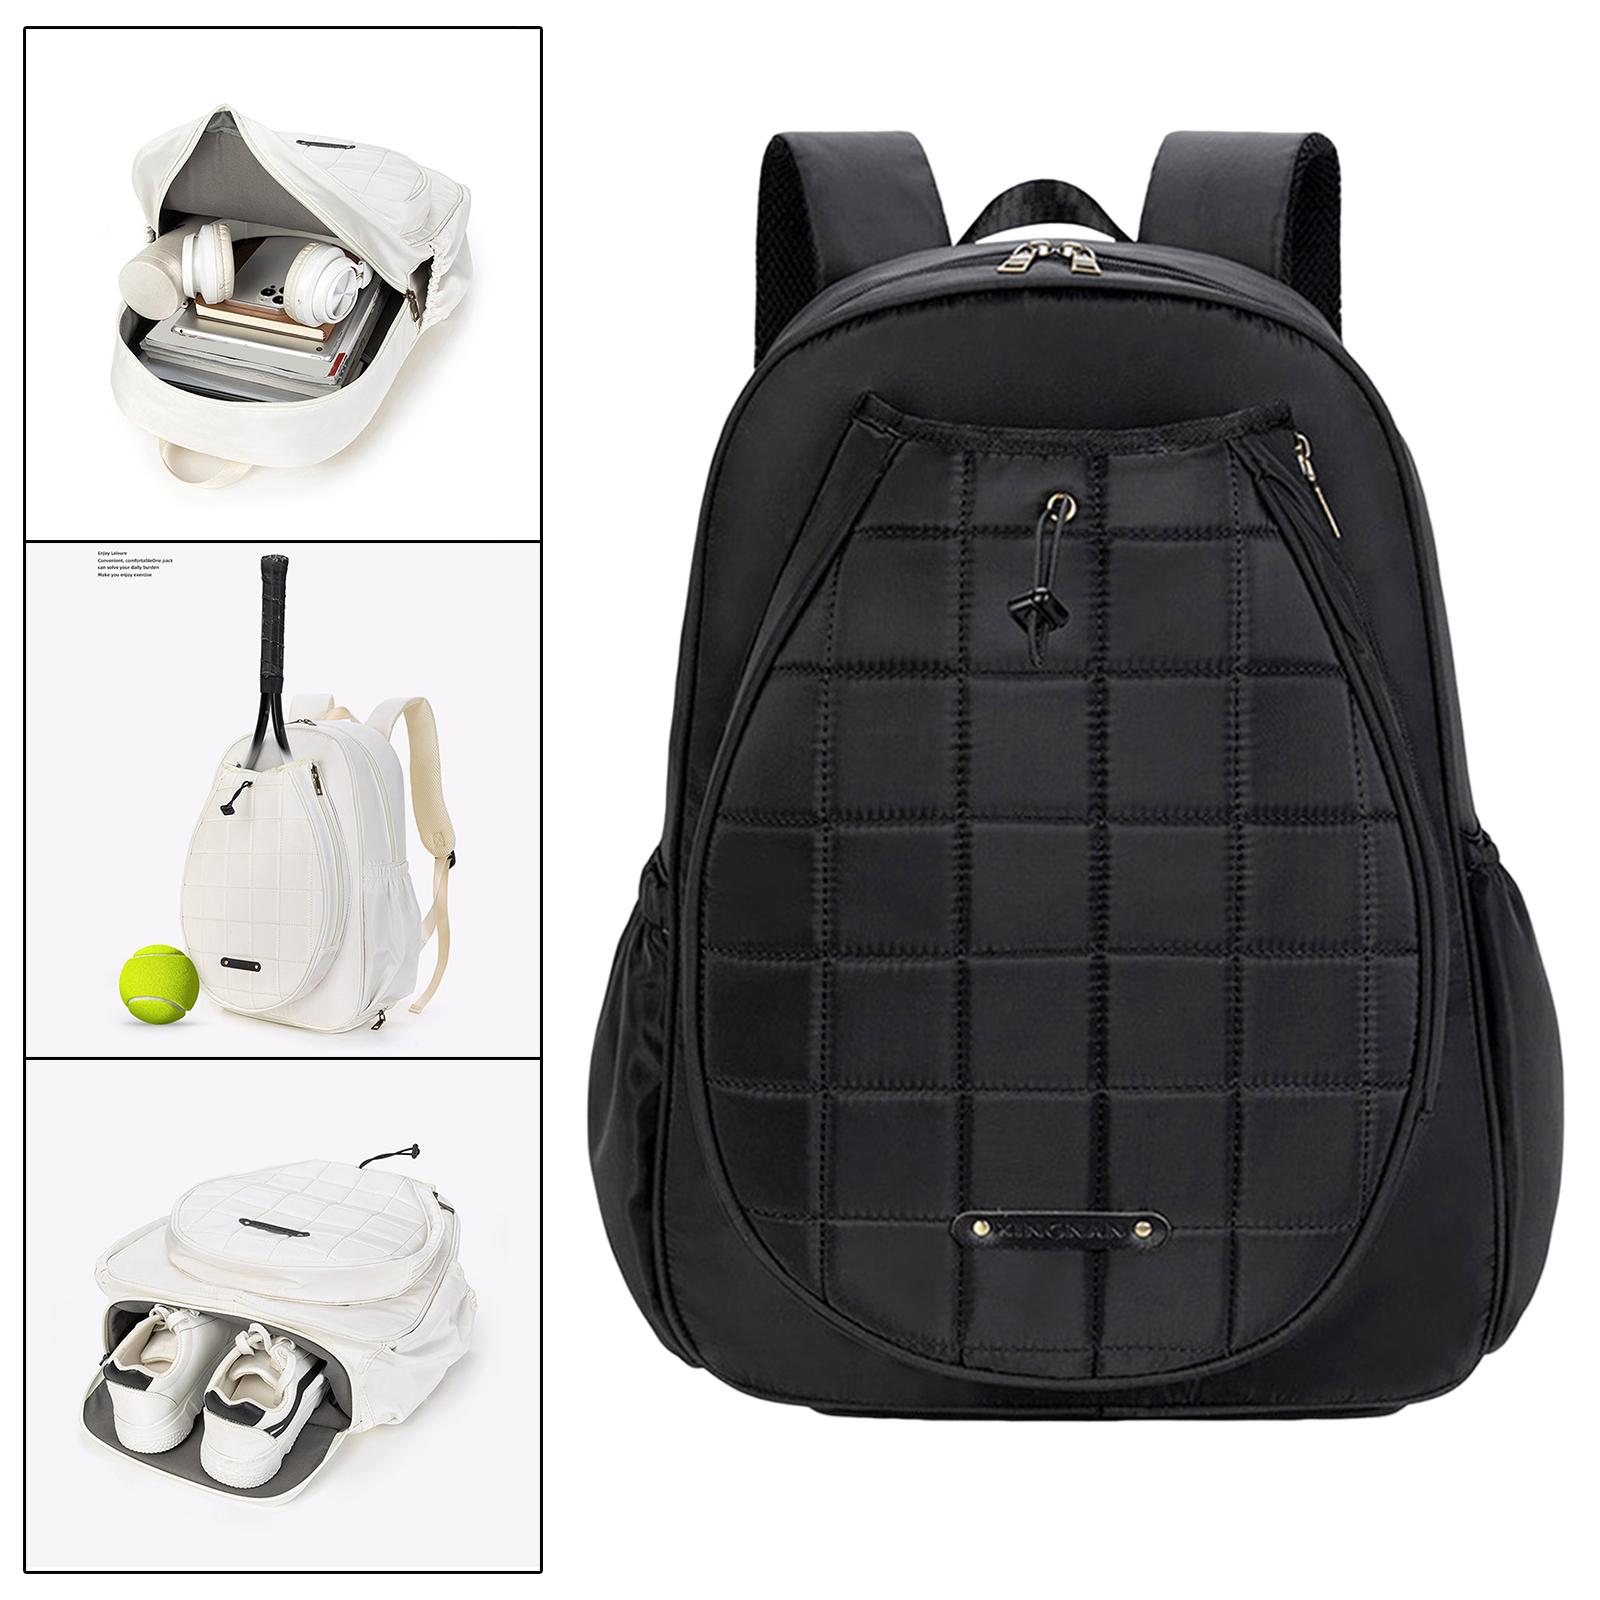 Tennis Backpack Tennis Bag Racket Holder for Tennis Racket Balls Accessories Black